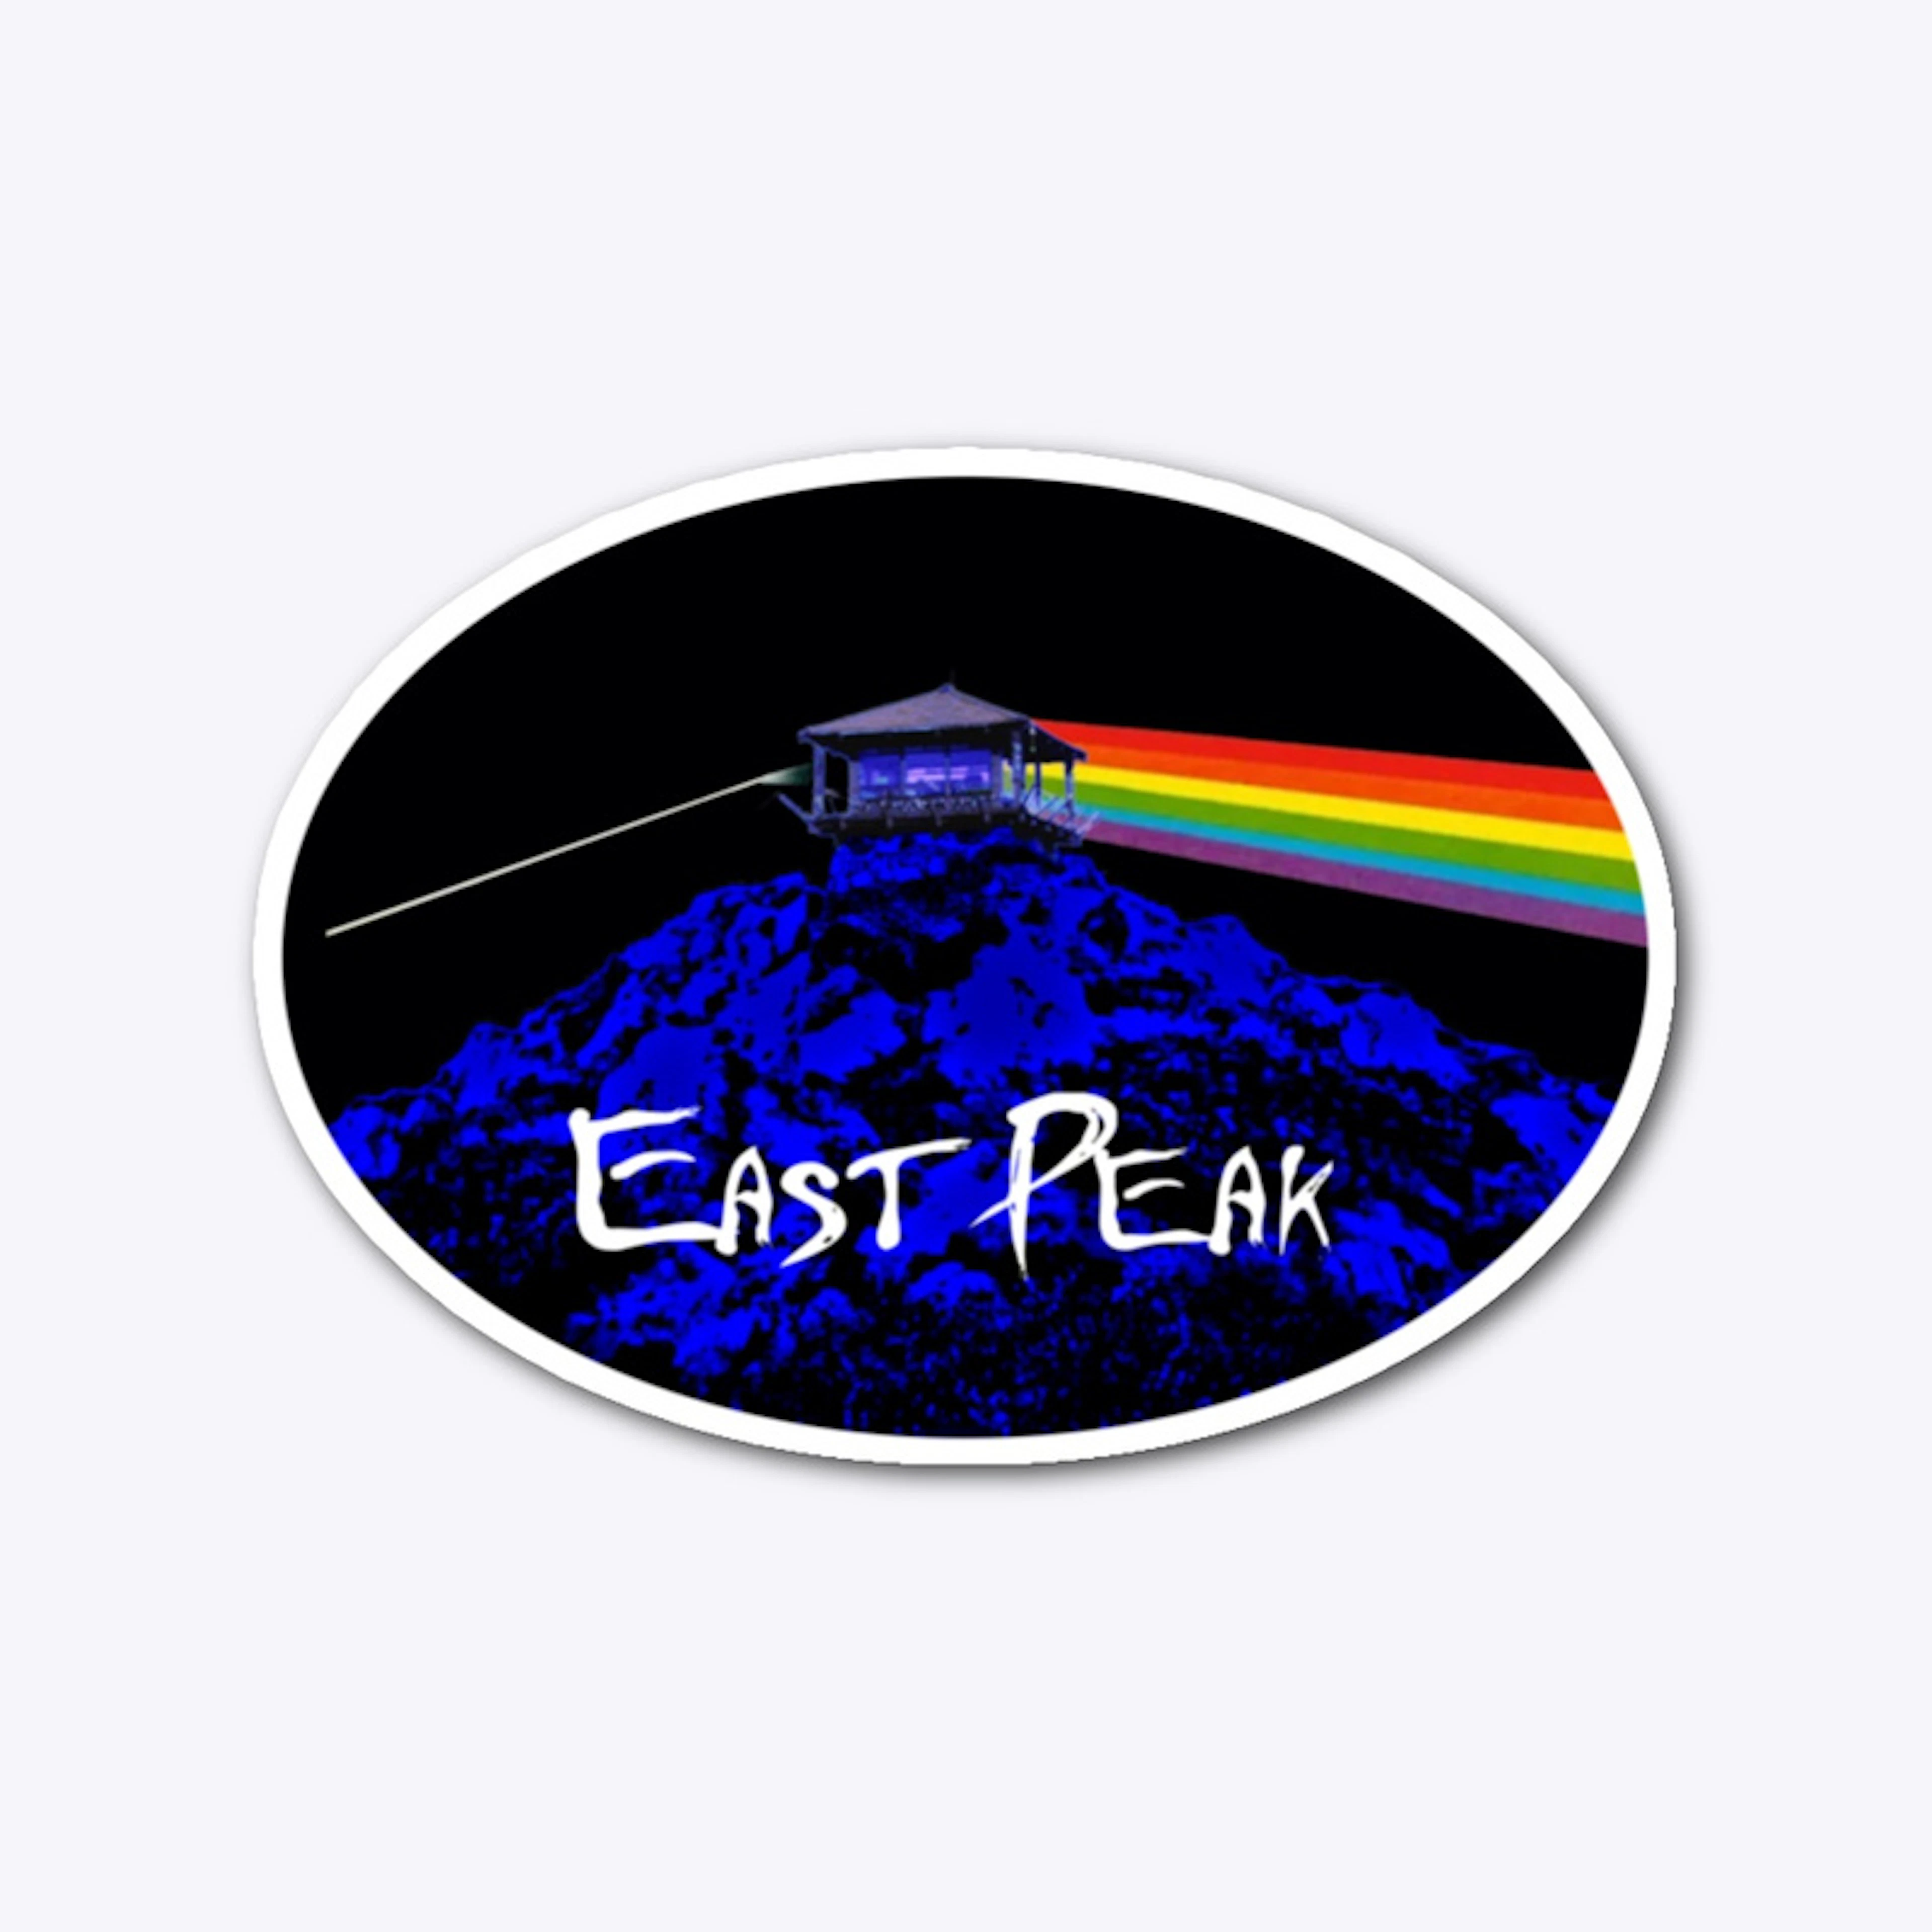 East Peak Floyd Ranger Station Mt Tam 